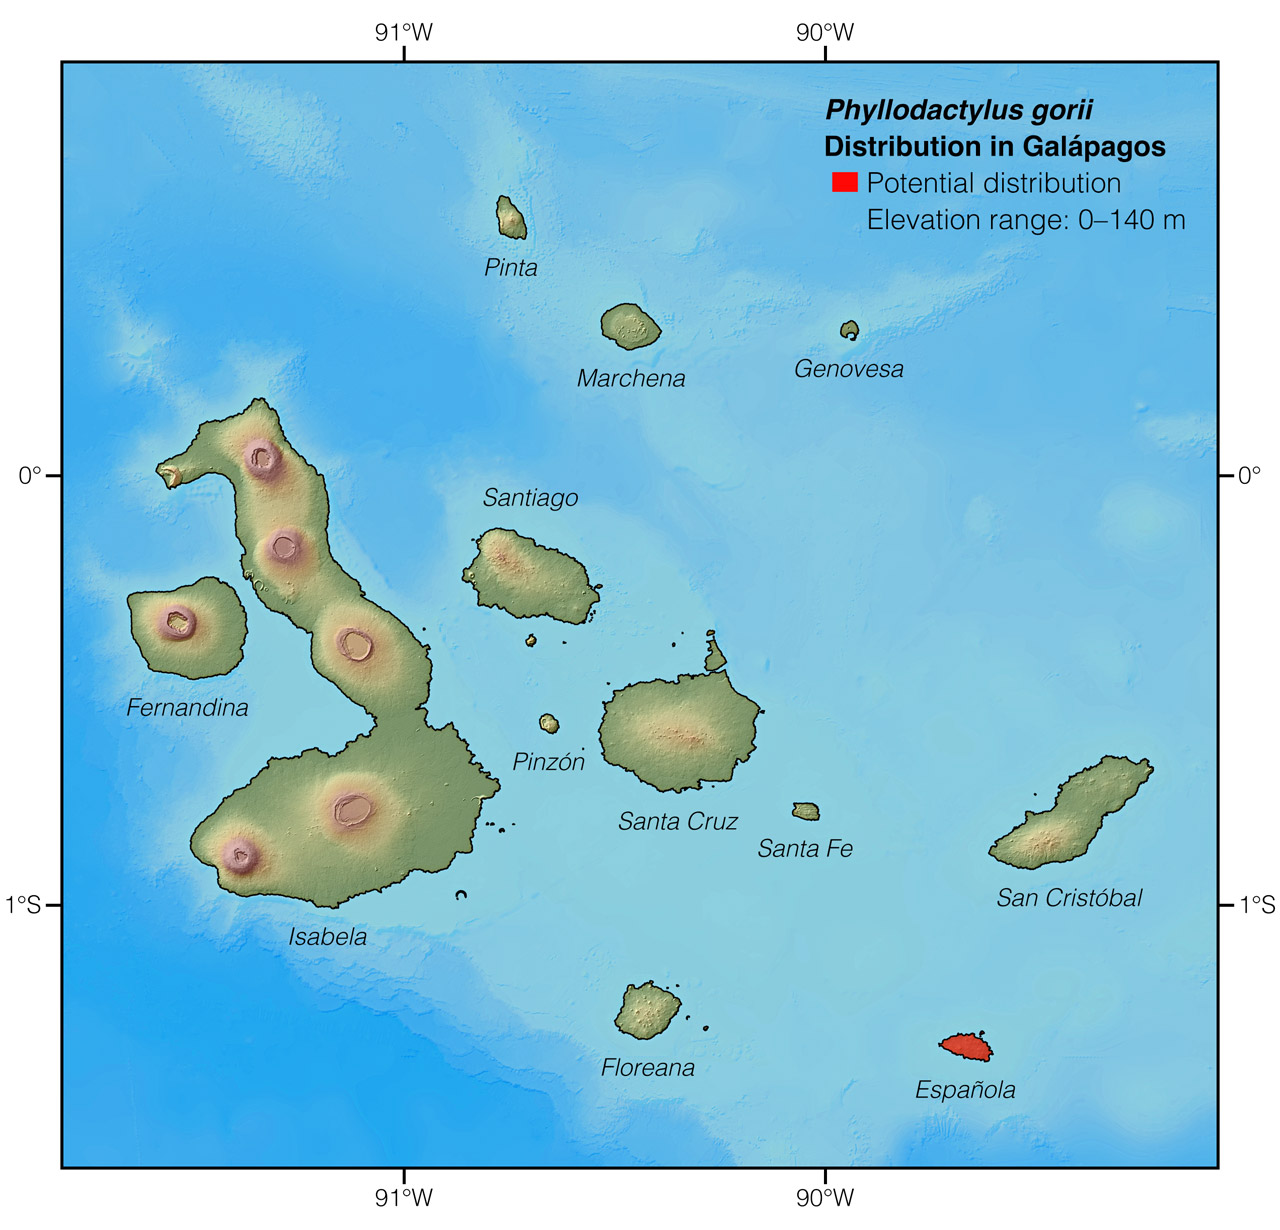 Distribution of Phyllodactylus gorii in Galápagos